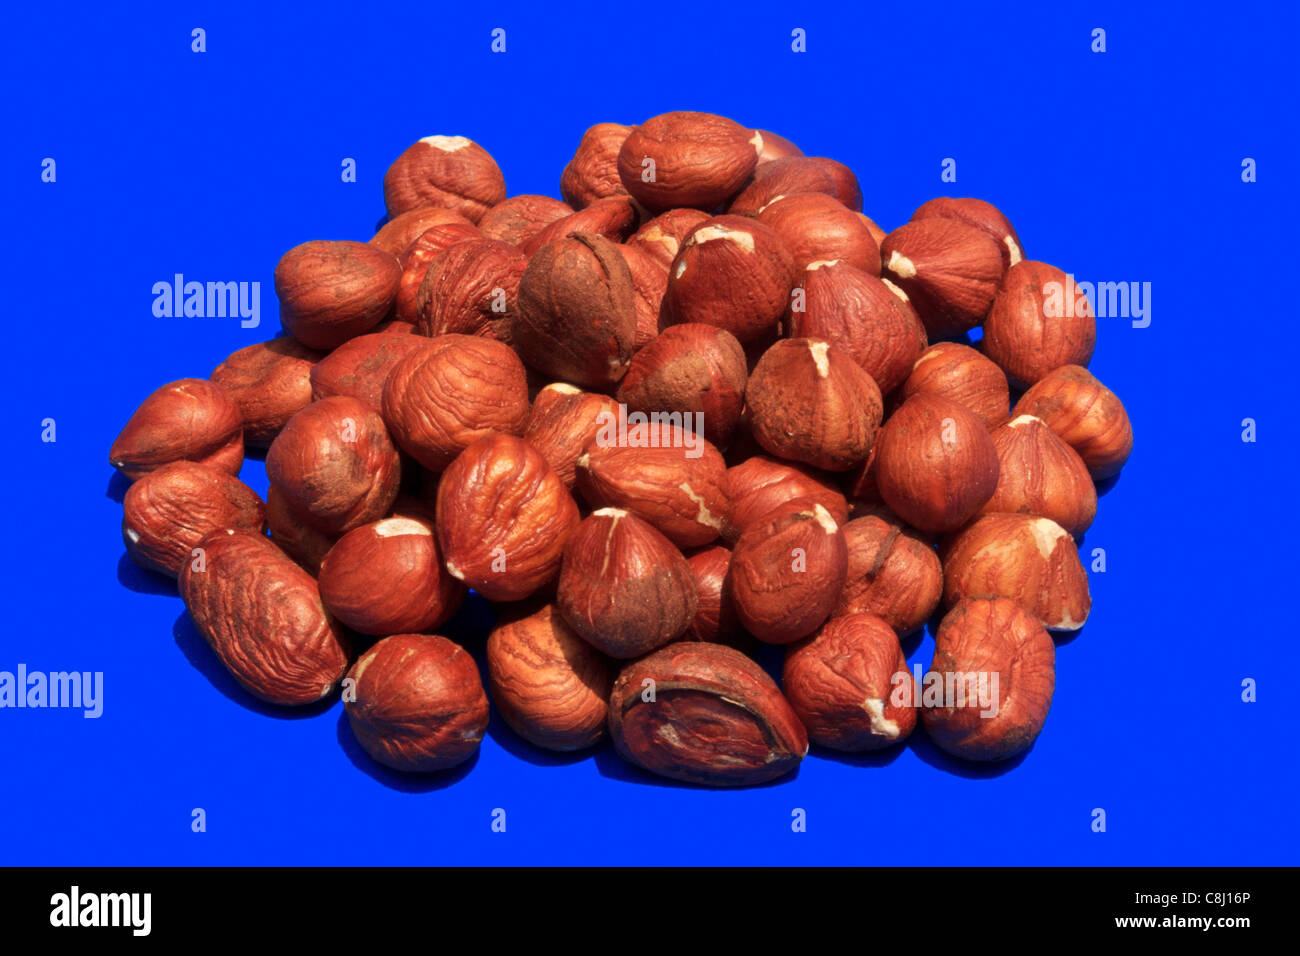 cobnut, filberts, hazelnuts, health, healthy, nutrition, nuts, shelled, food Stock Photo